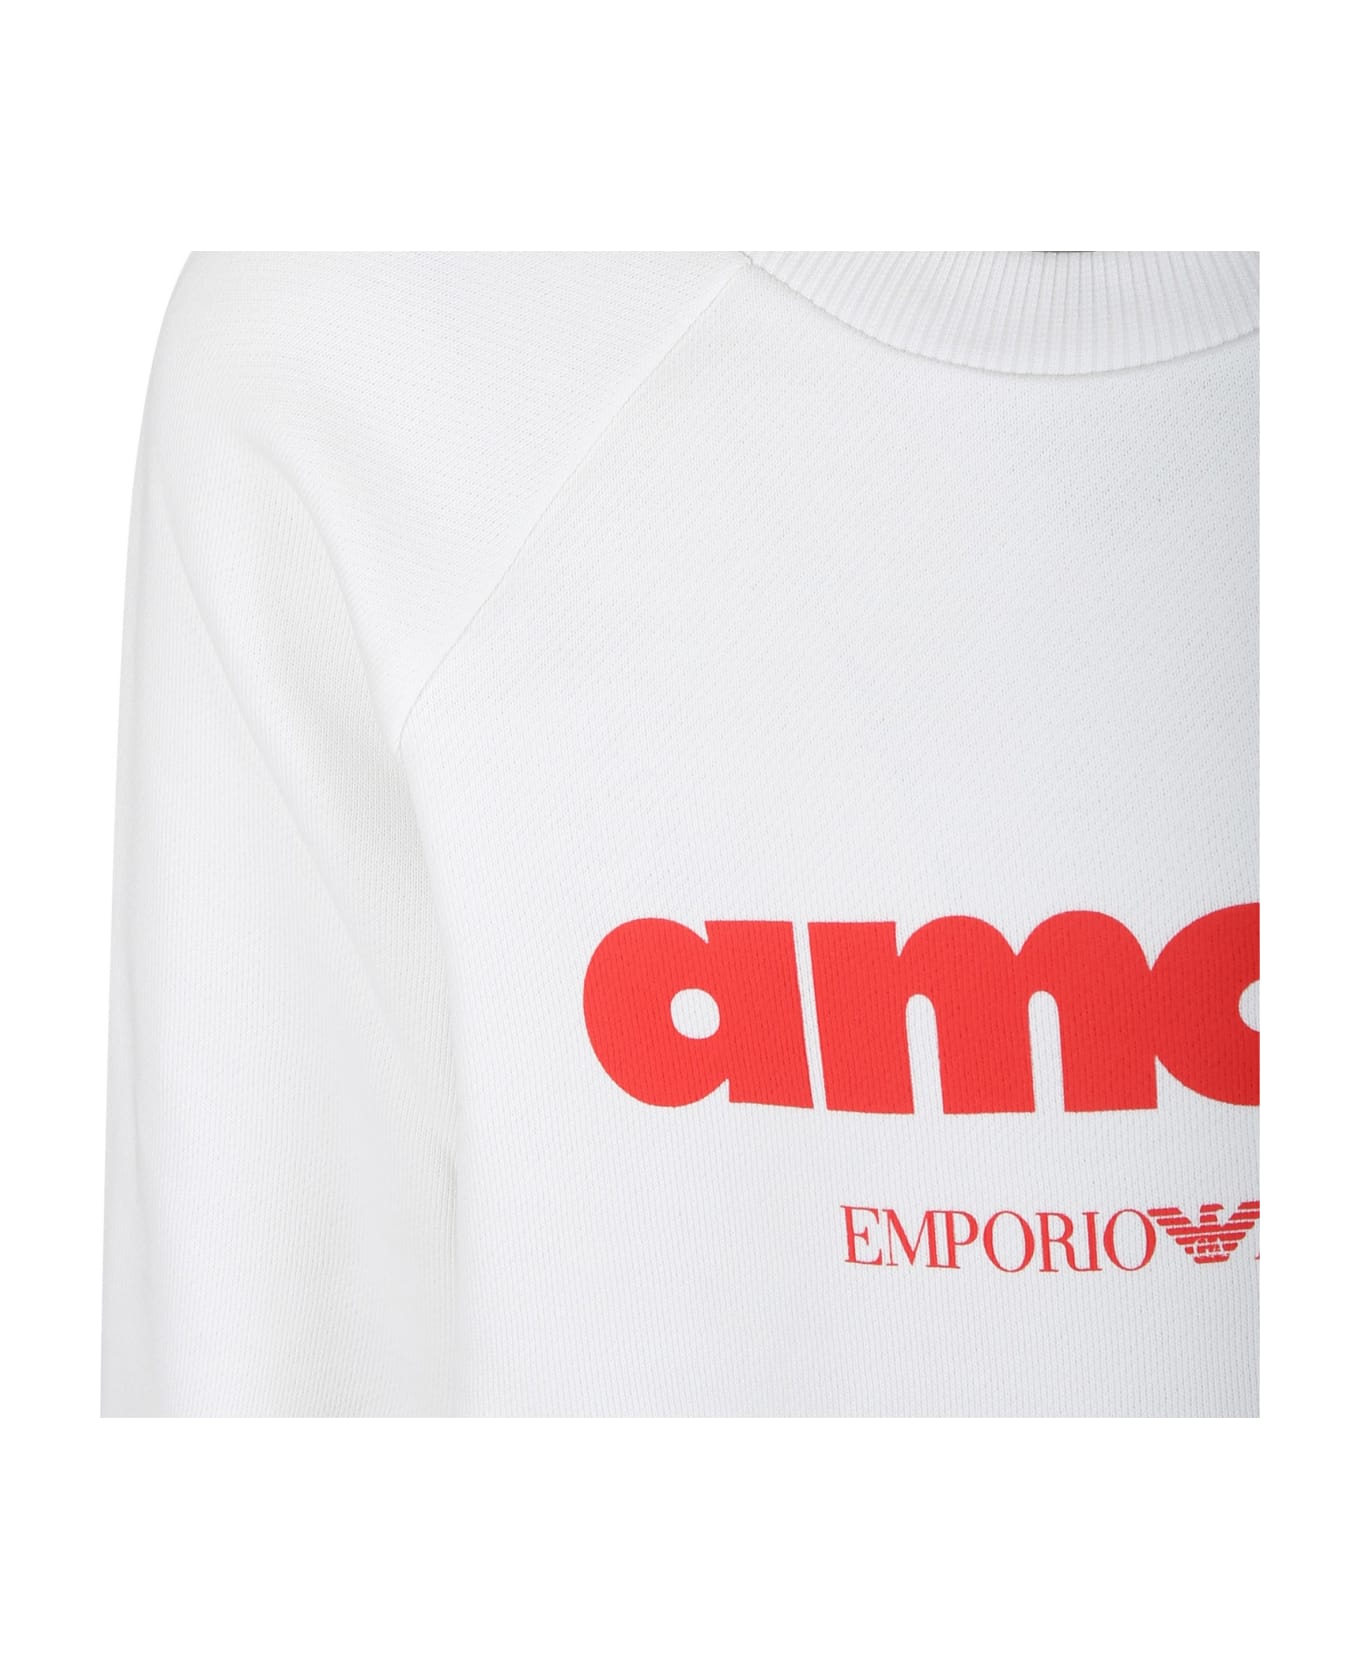 Emporio Armani Ivory Sweatshirt For Kids With Love Writing - Ivory